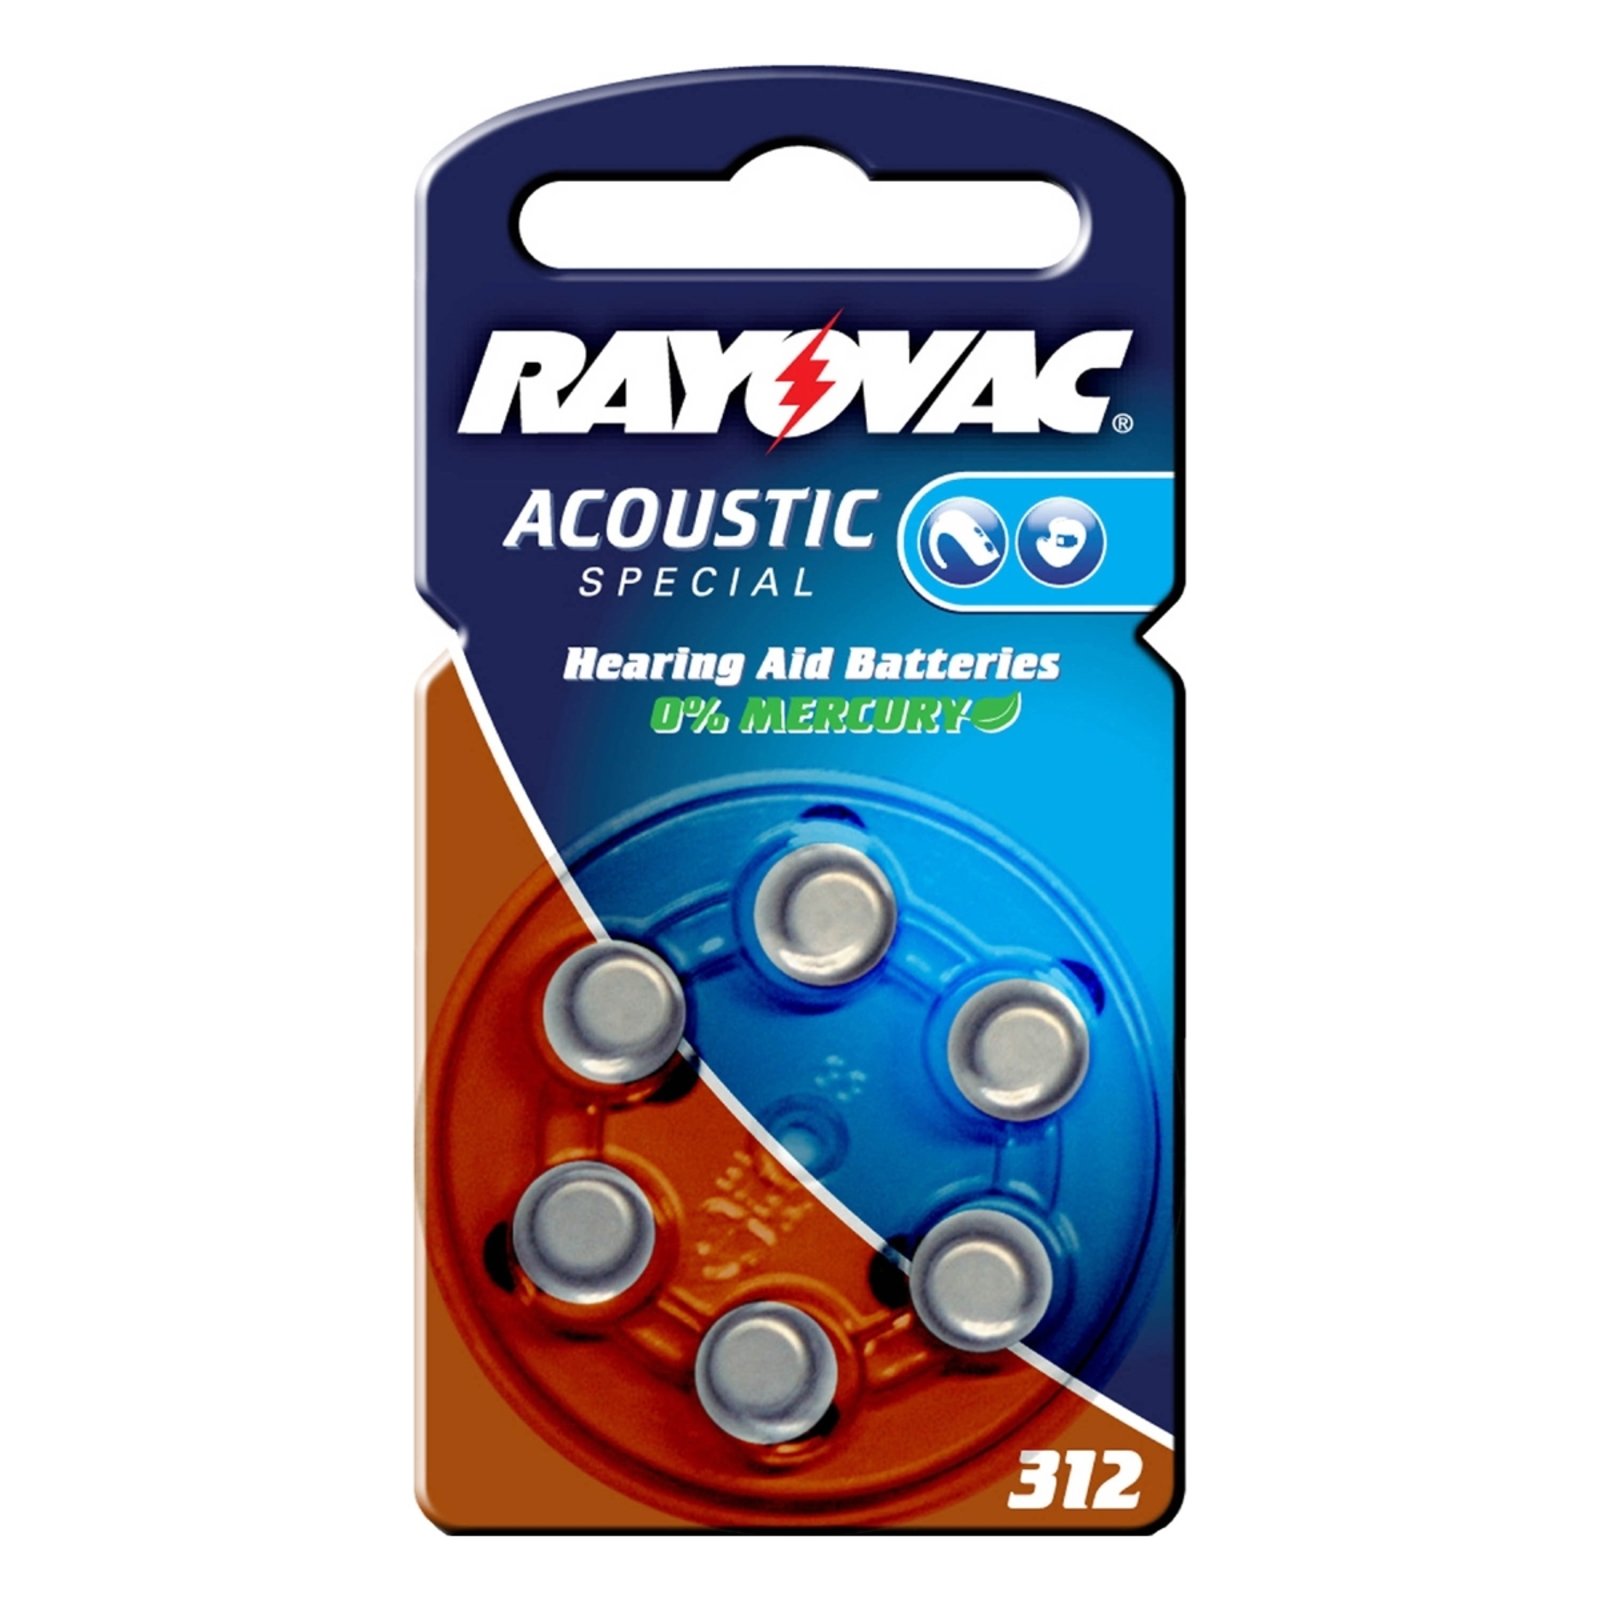 Knapbatteri Rayovac 312 Acoustic 1,4V, 180m/Ah